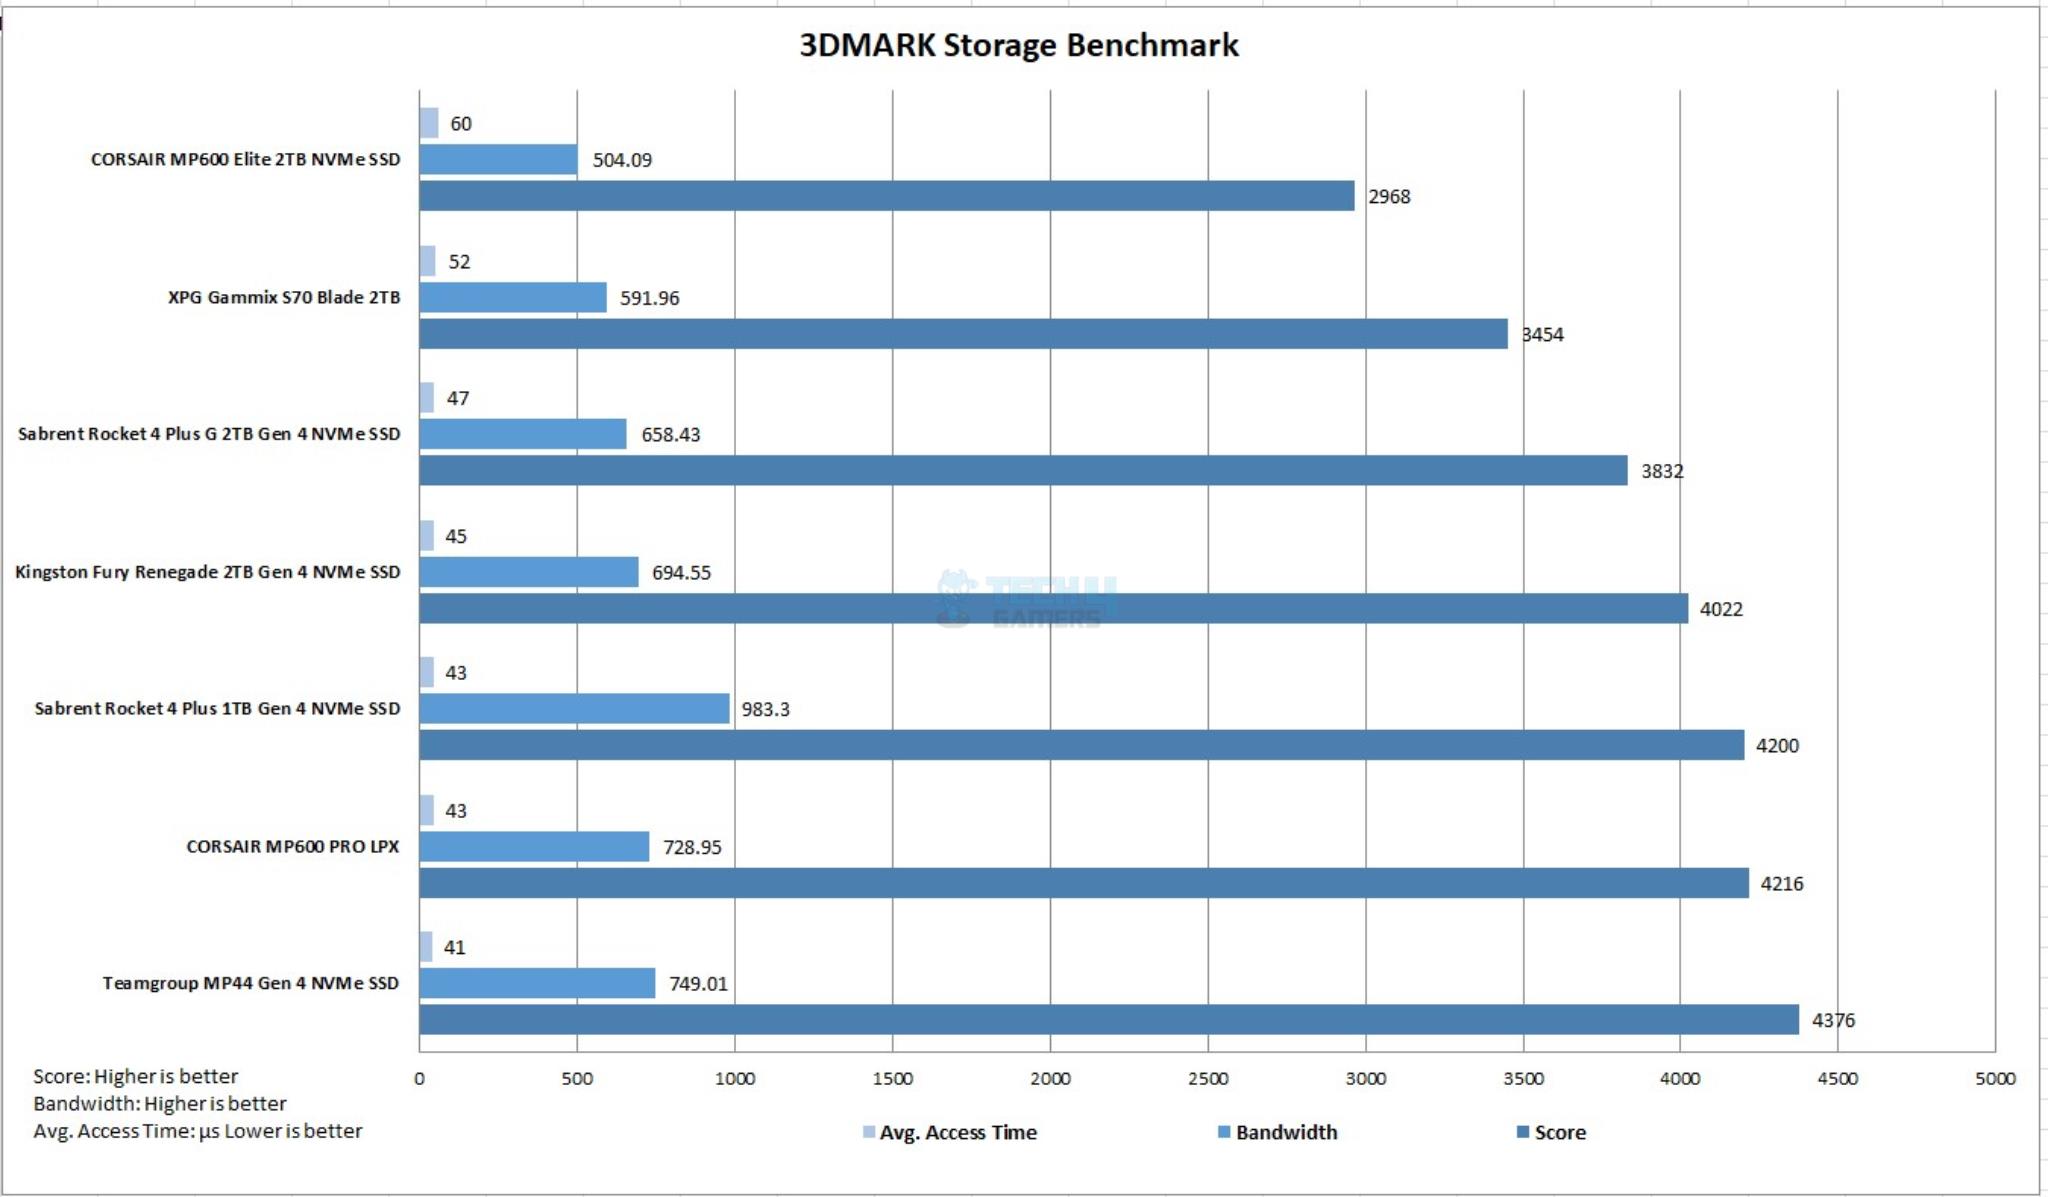 CORSAIR MP600 Elite 2TB NVMe SSD — 3DMARK Storage Benchmark